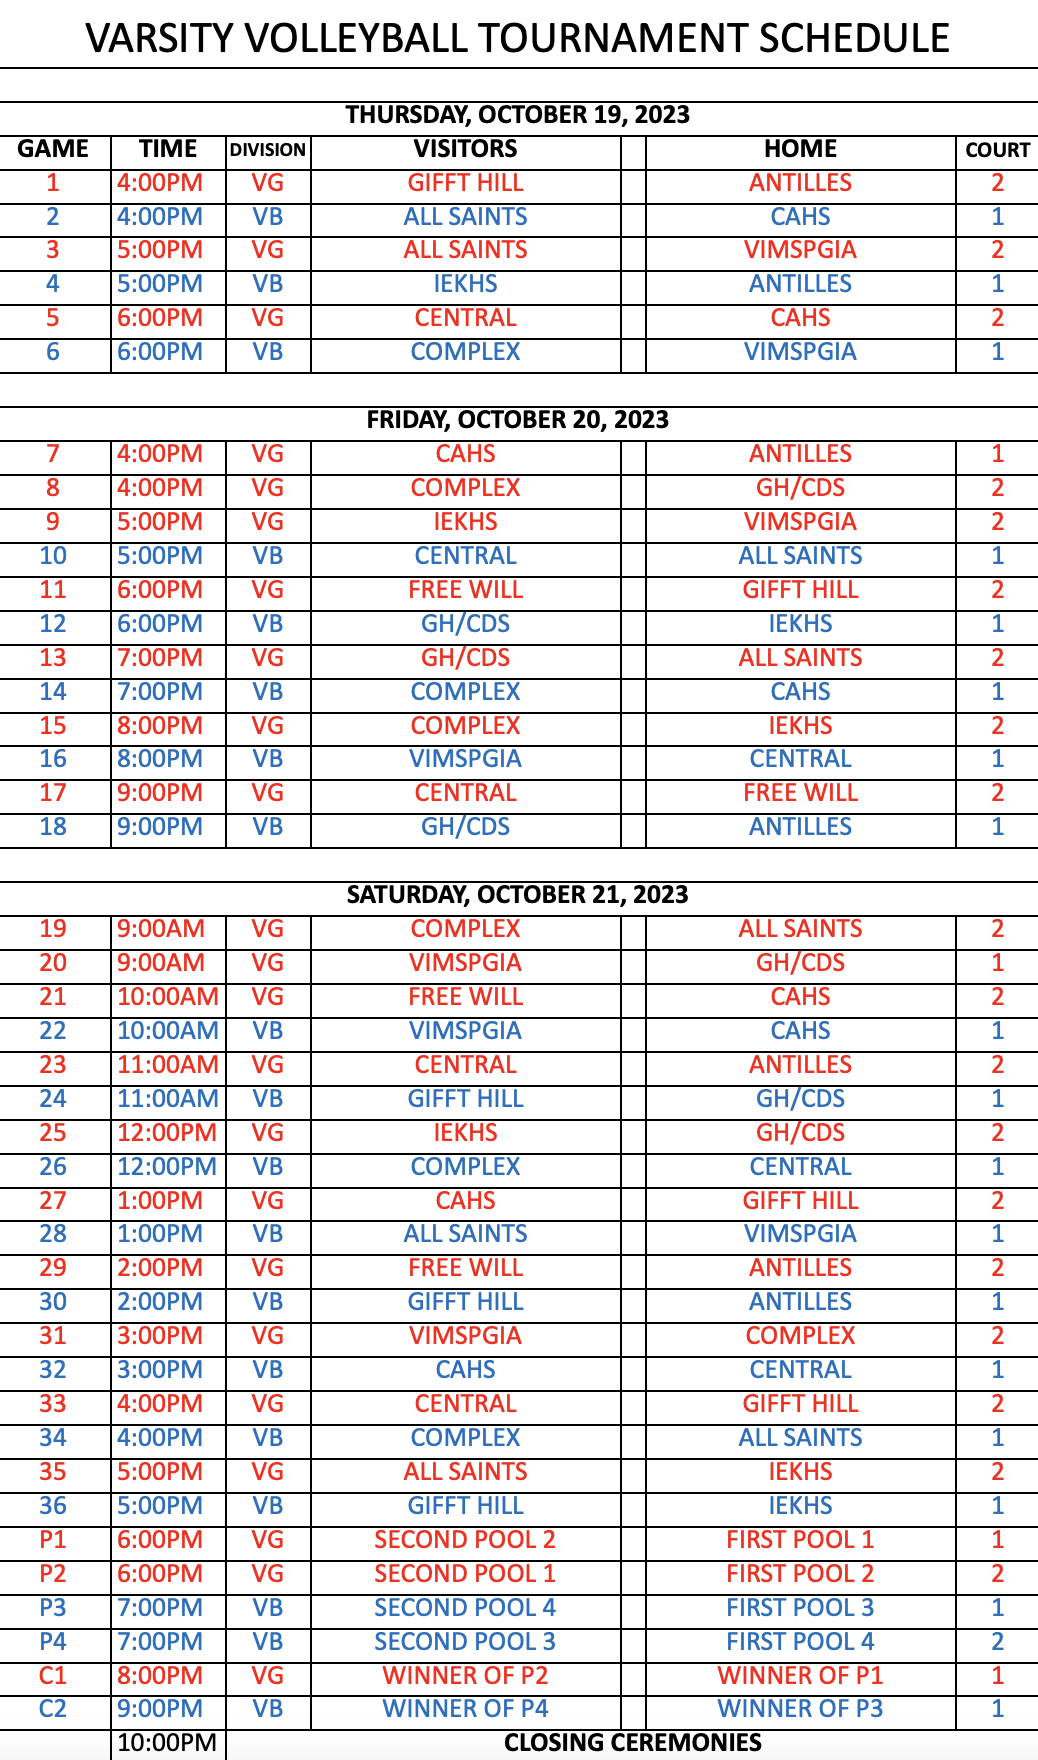 The 2023 Antilles School Varsity Volleyball Tournament schedule.